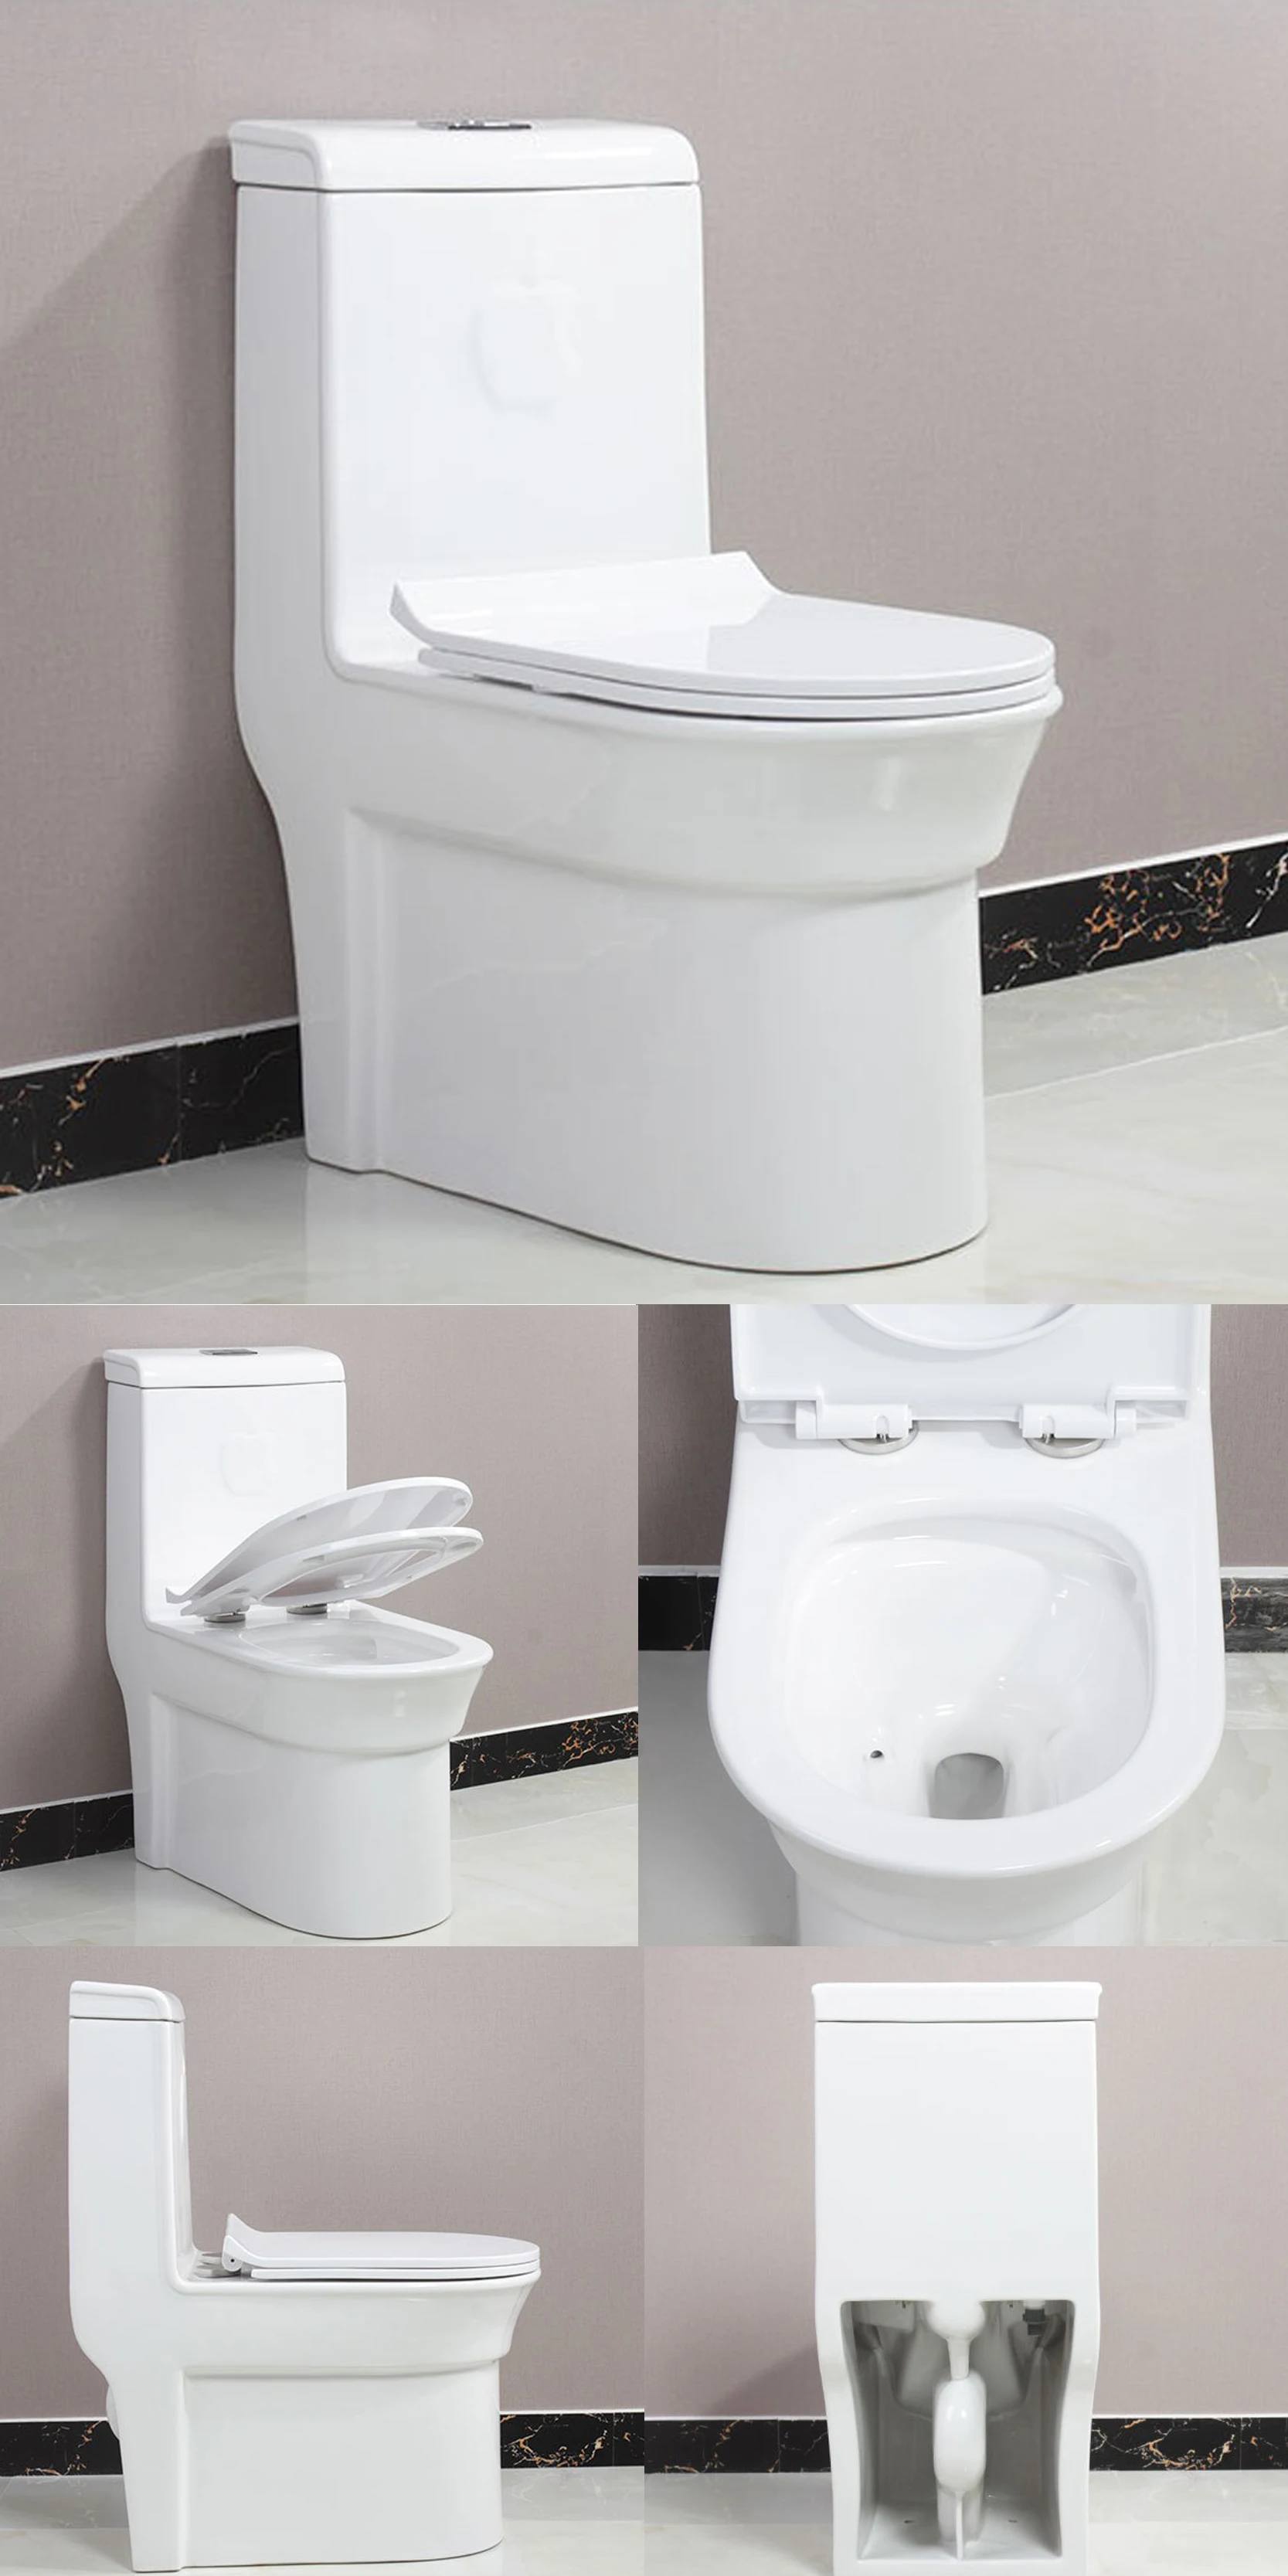 JOININ High Quantity Bathroom Ceramic Tornado elegant design one piece Toilet  JY1305